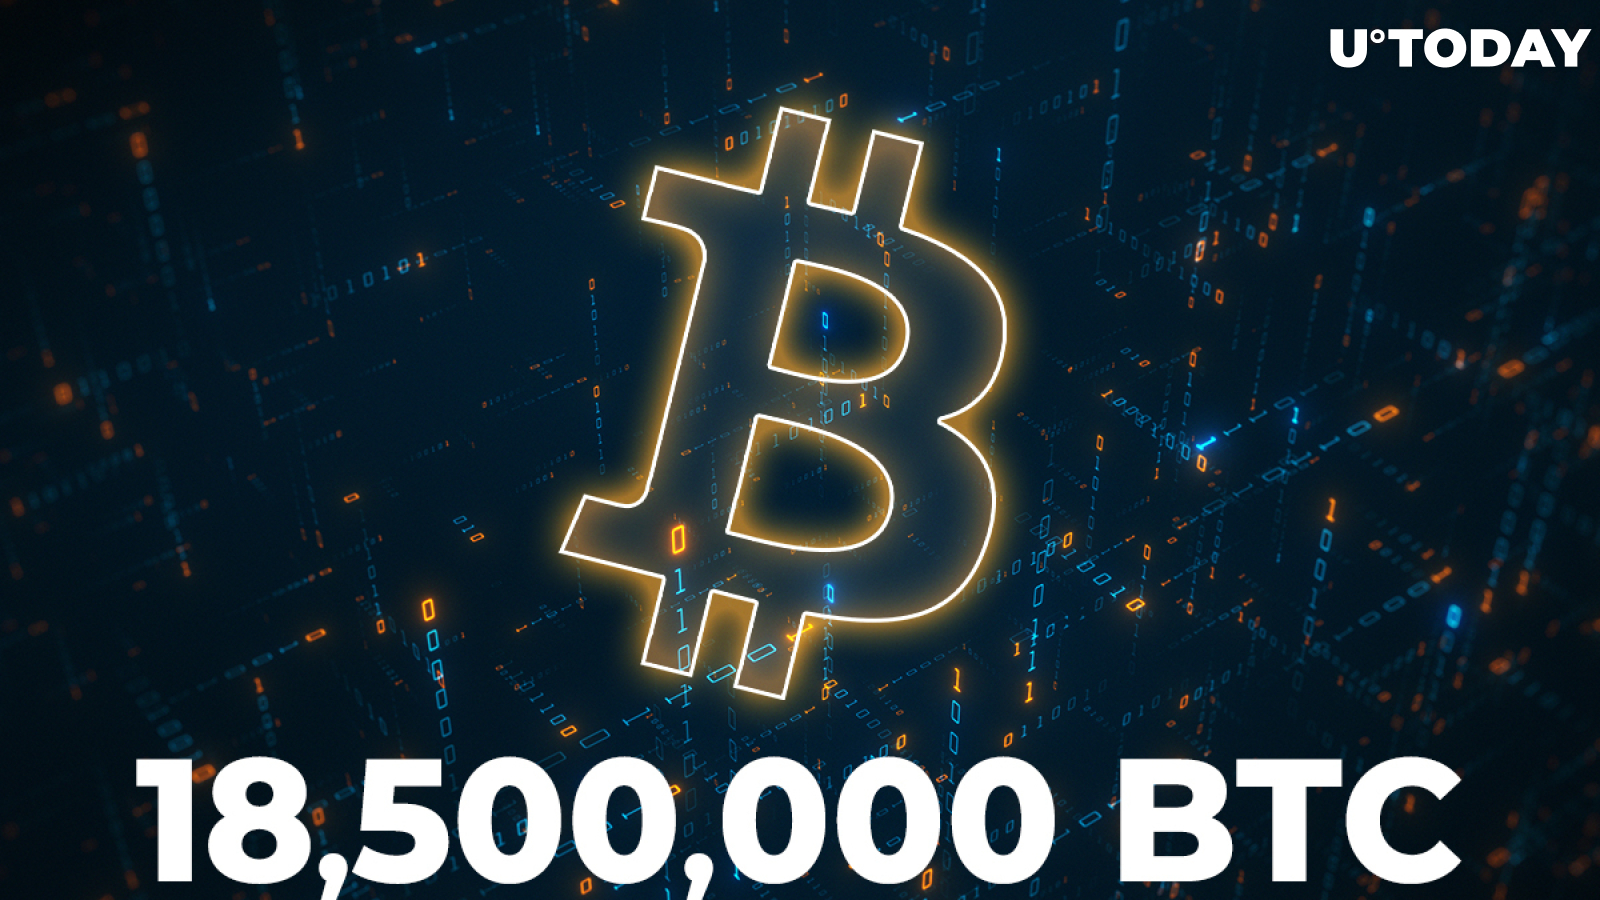 Bitcoin Network Surpasses 18,500,000 BTC in Circulation